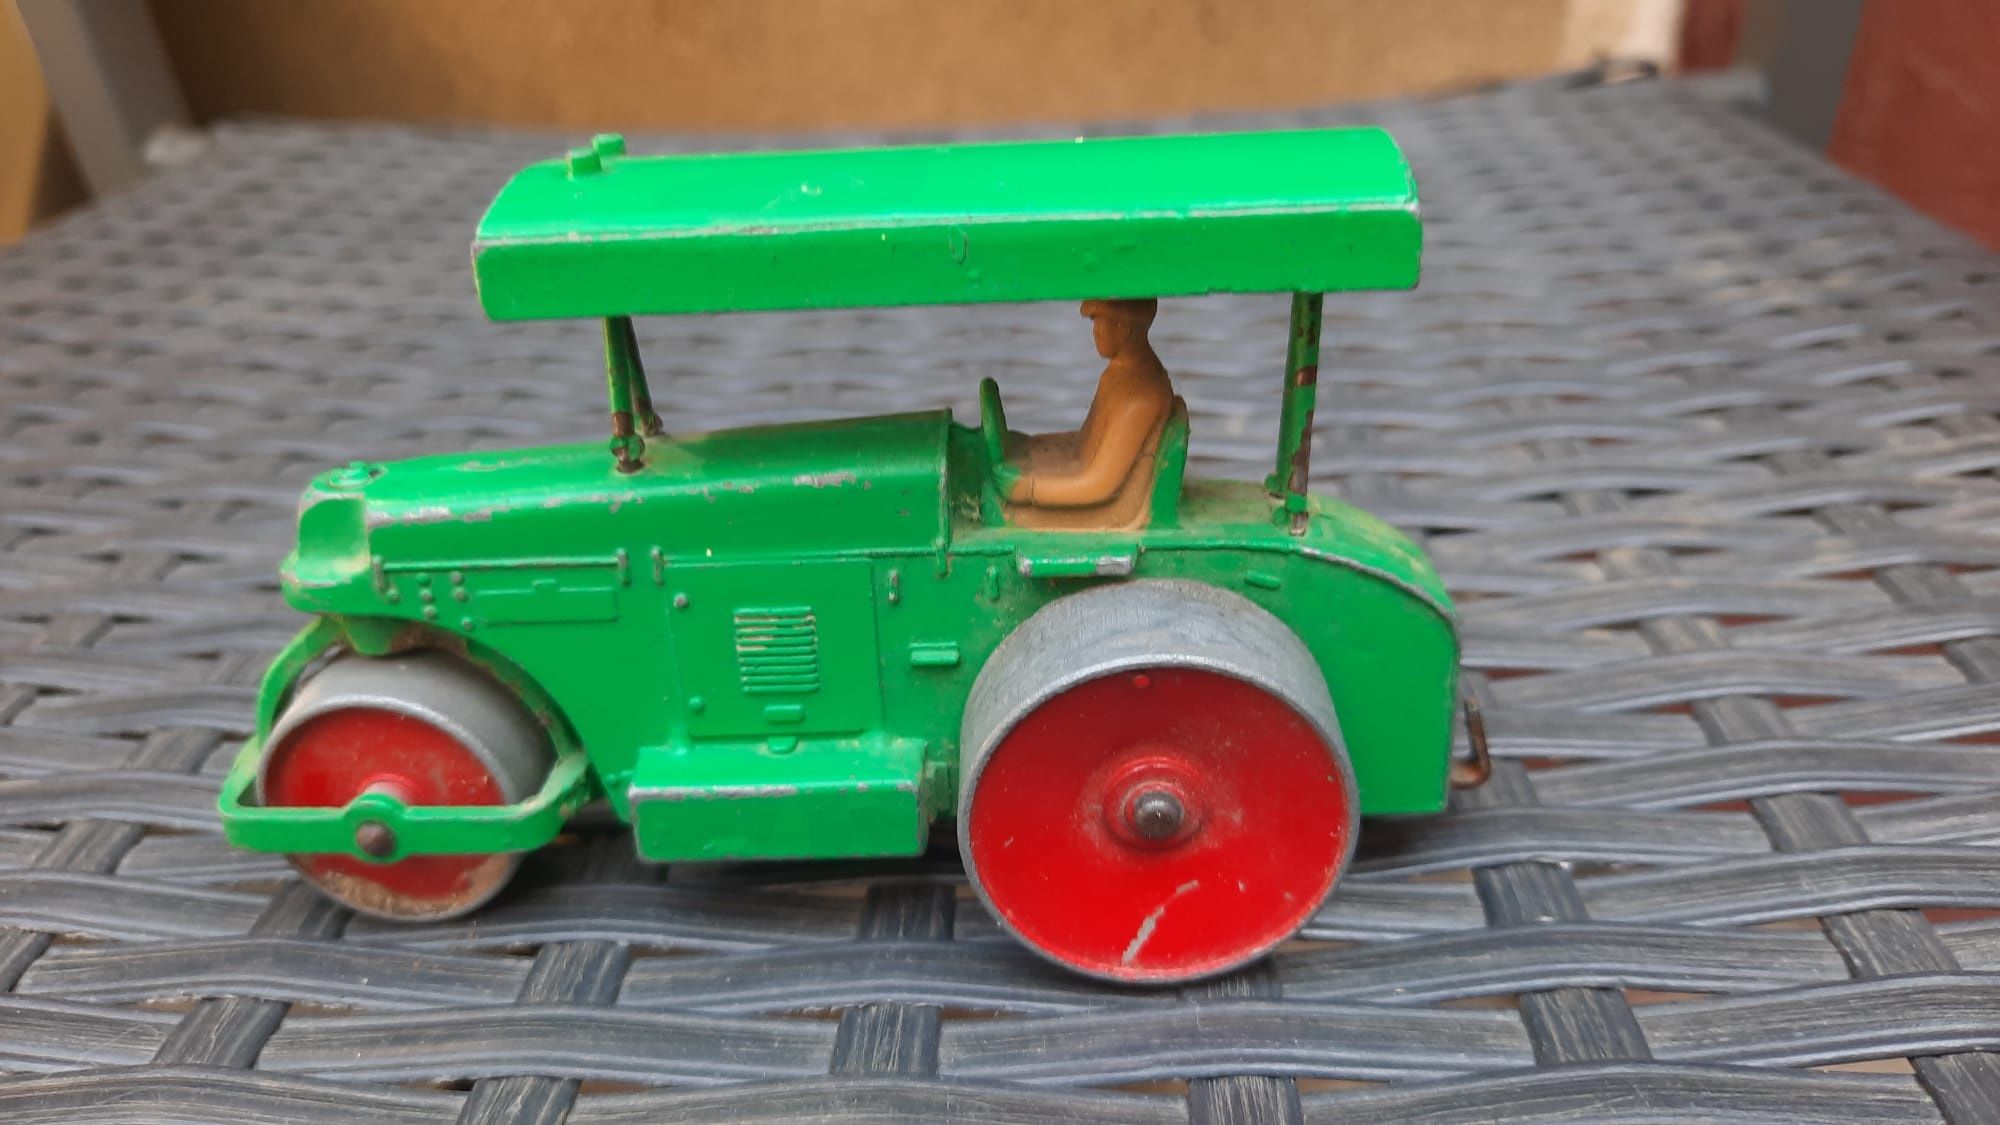 Macheta metalica dinky toys made in england veche de colectie